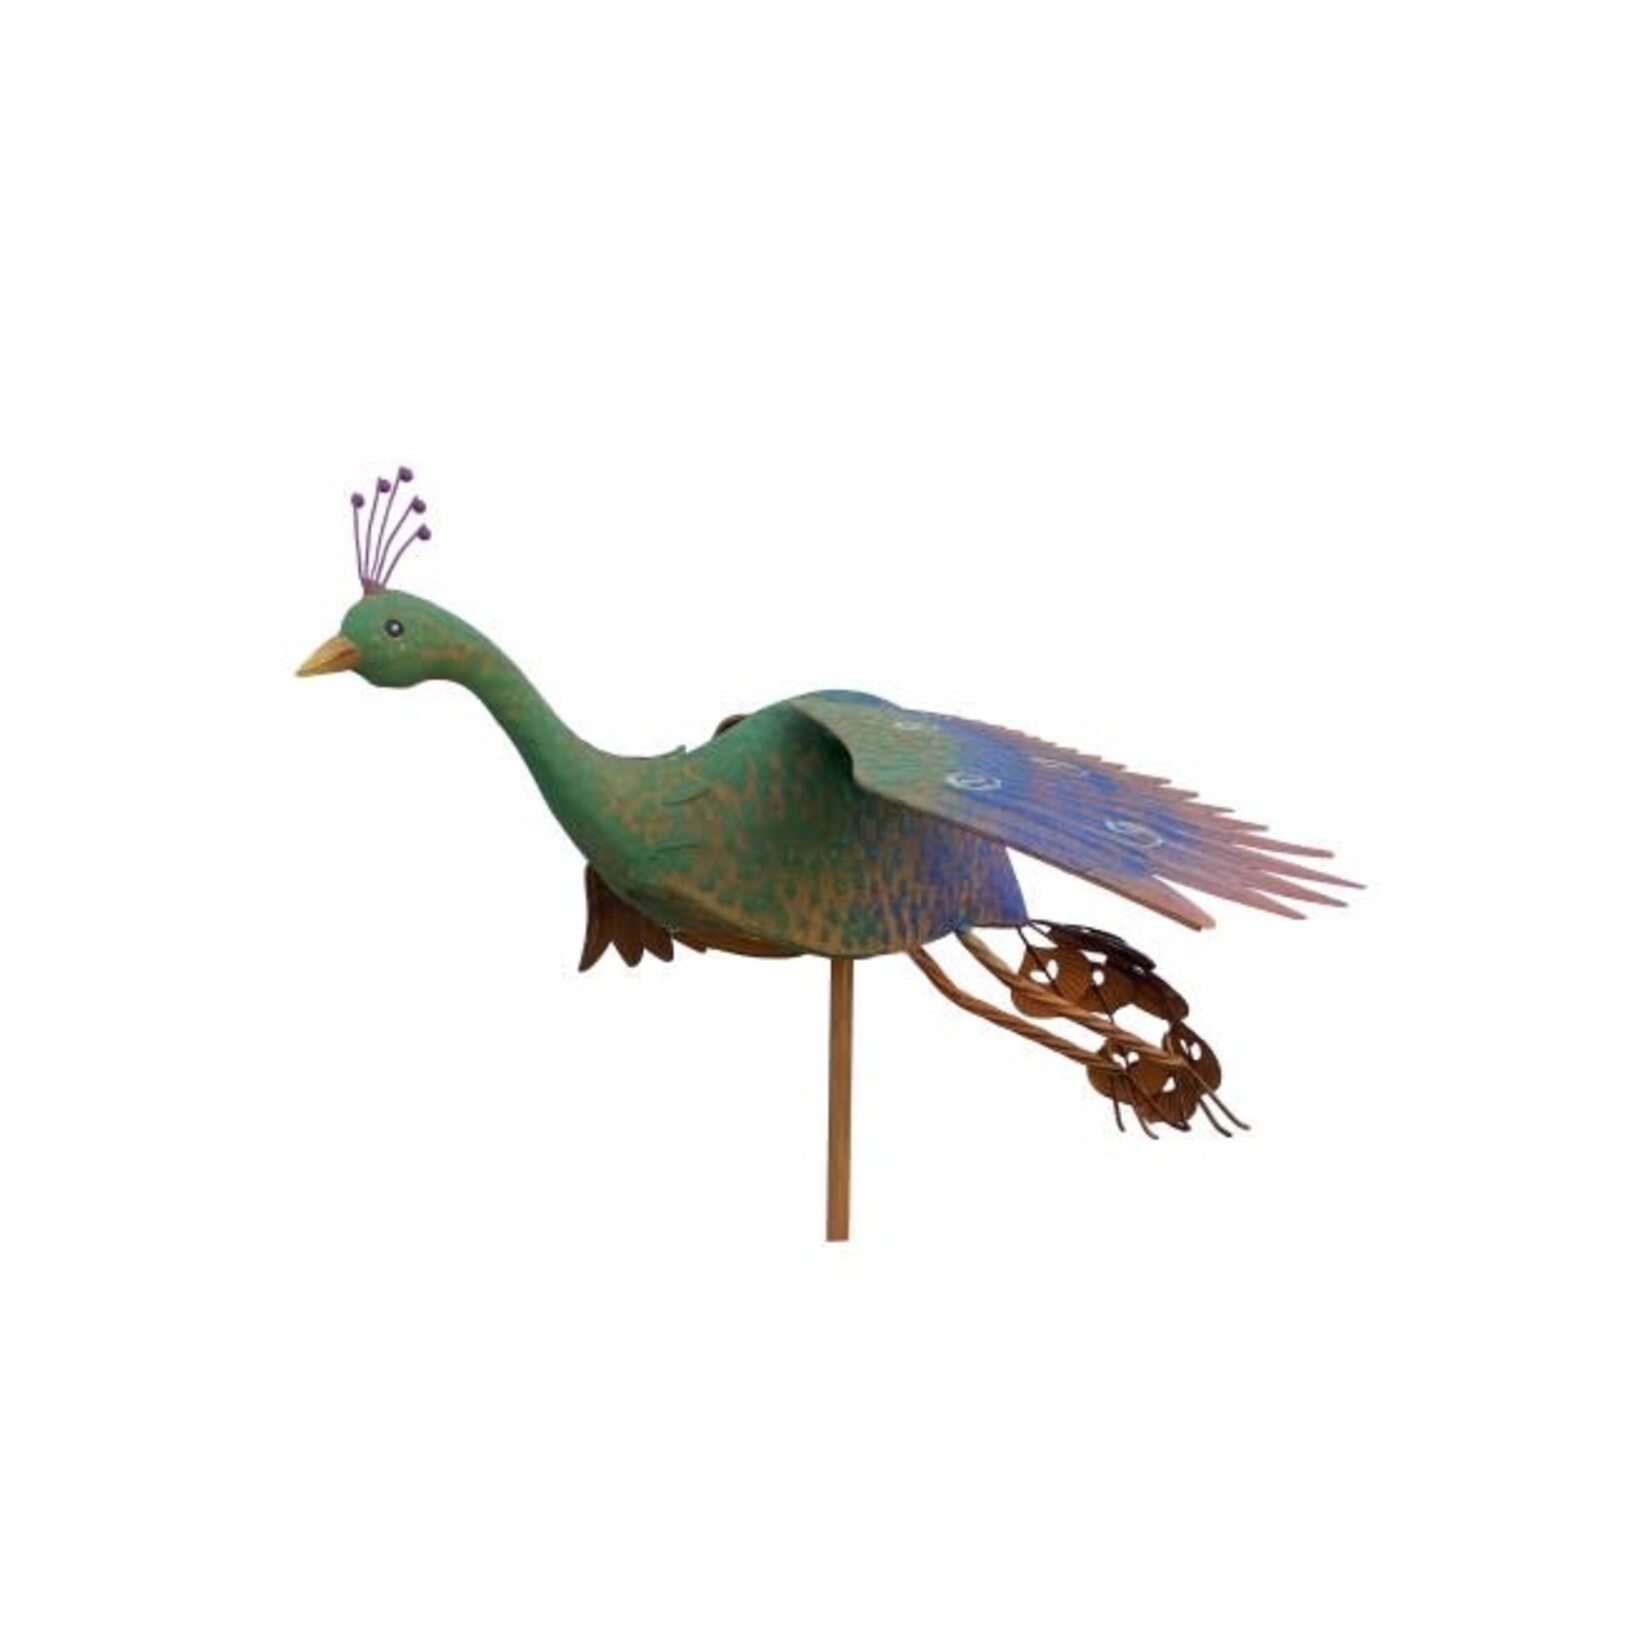 Balancer Stake - Rustic Flying Peacock